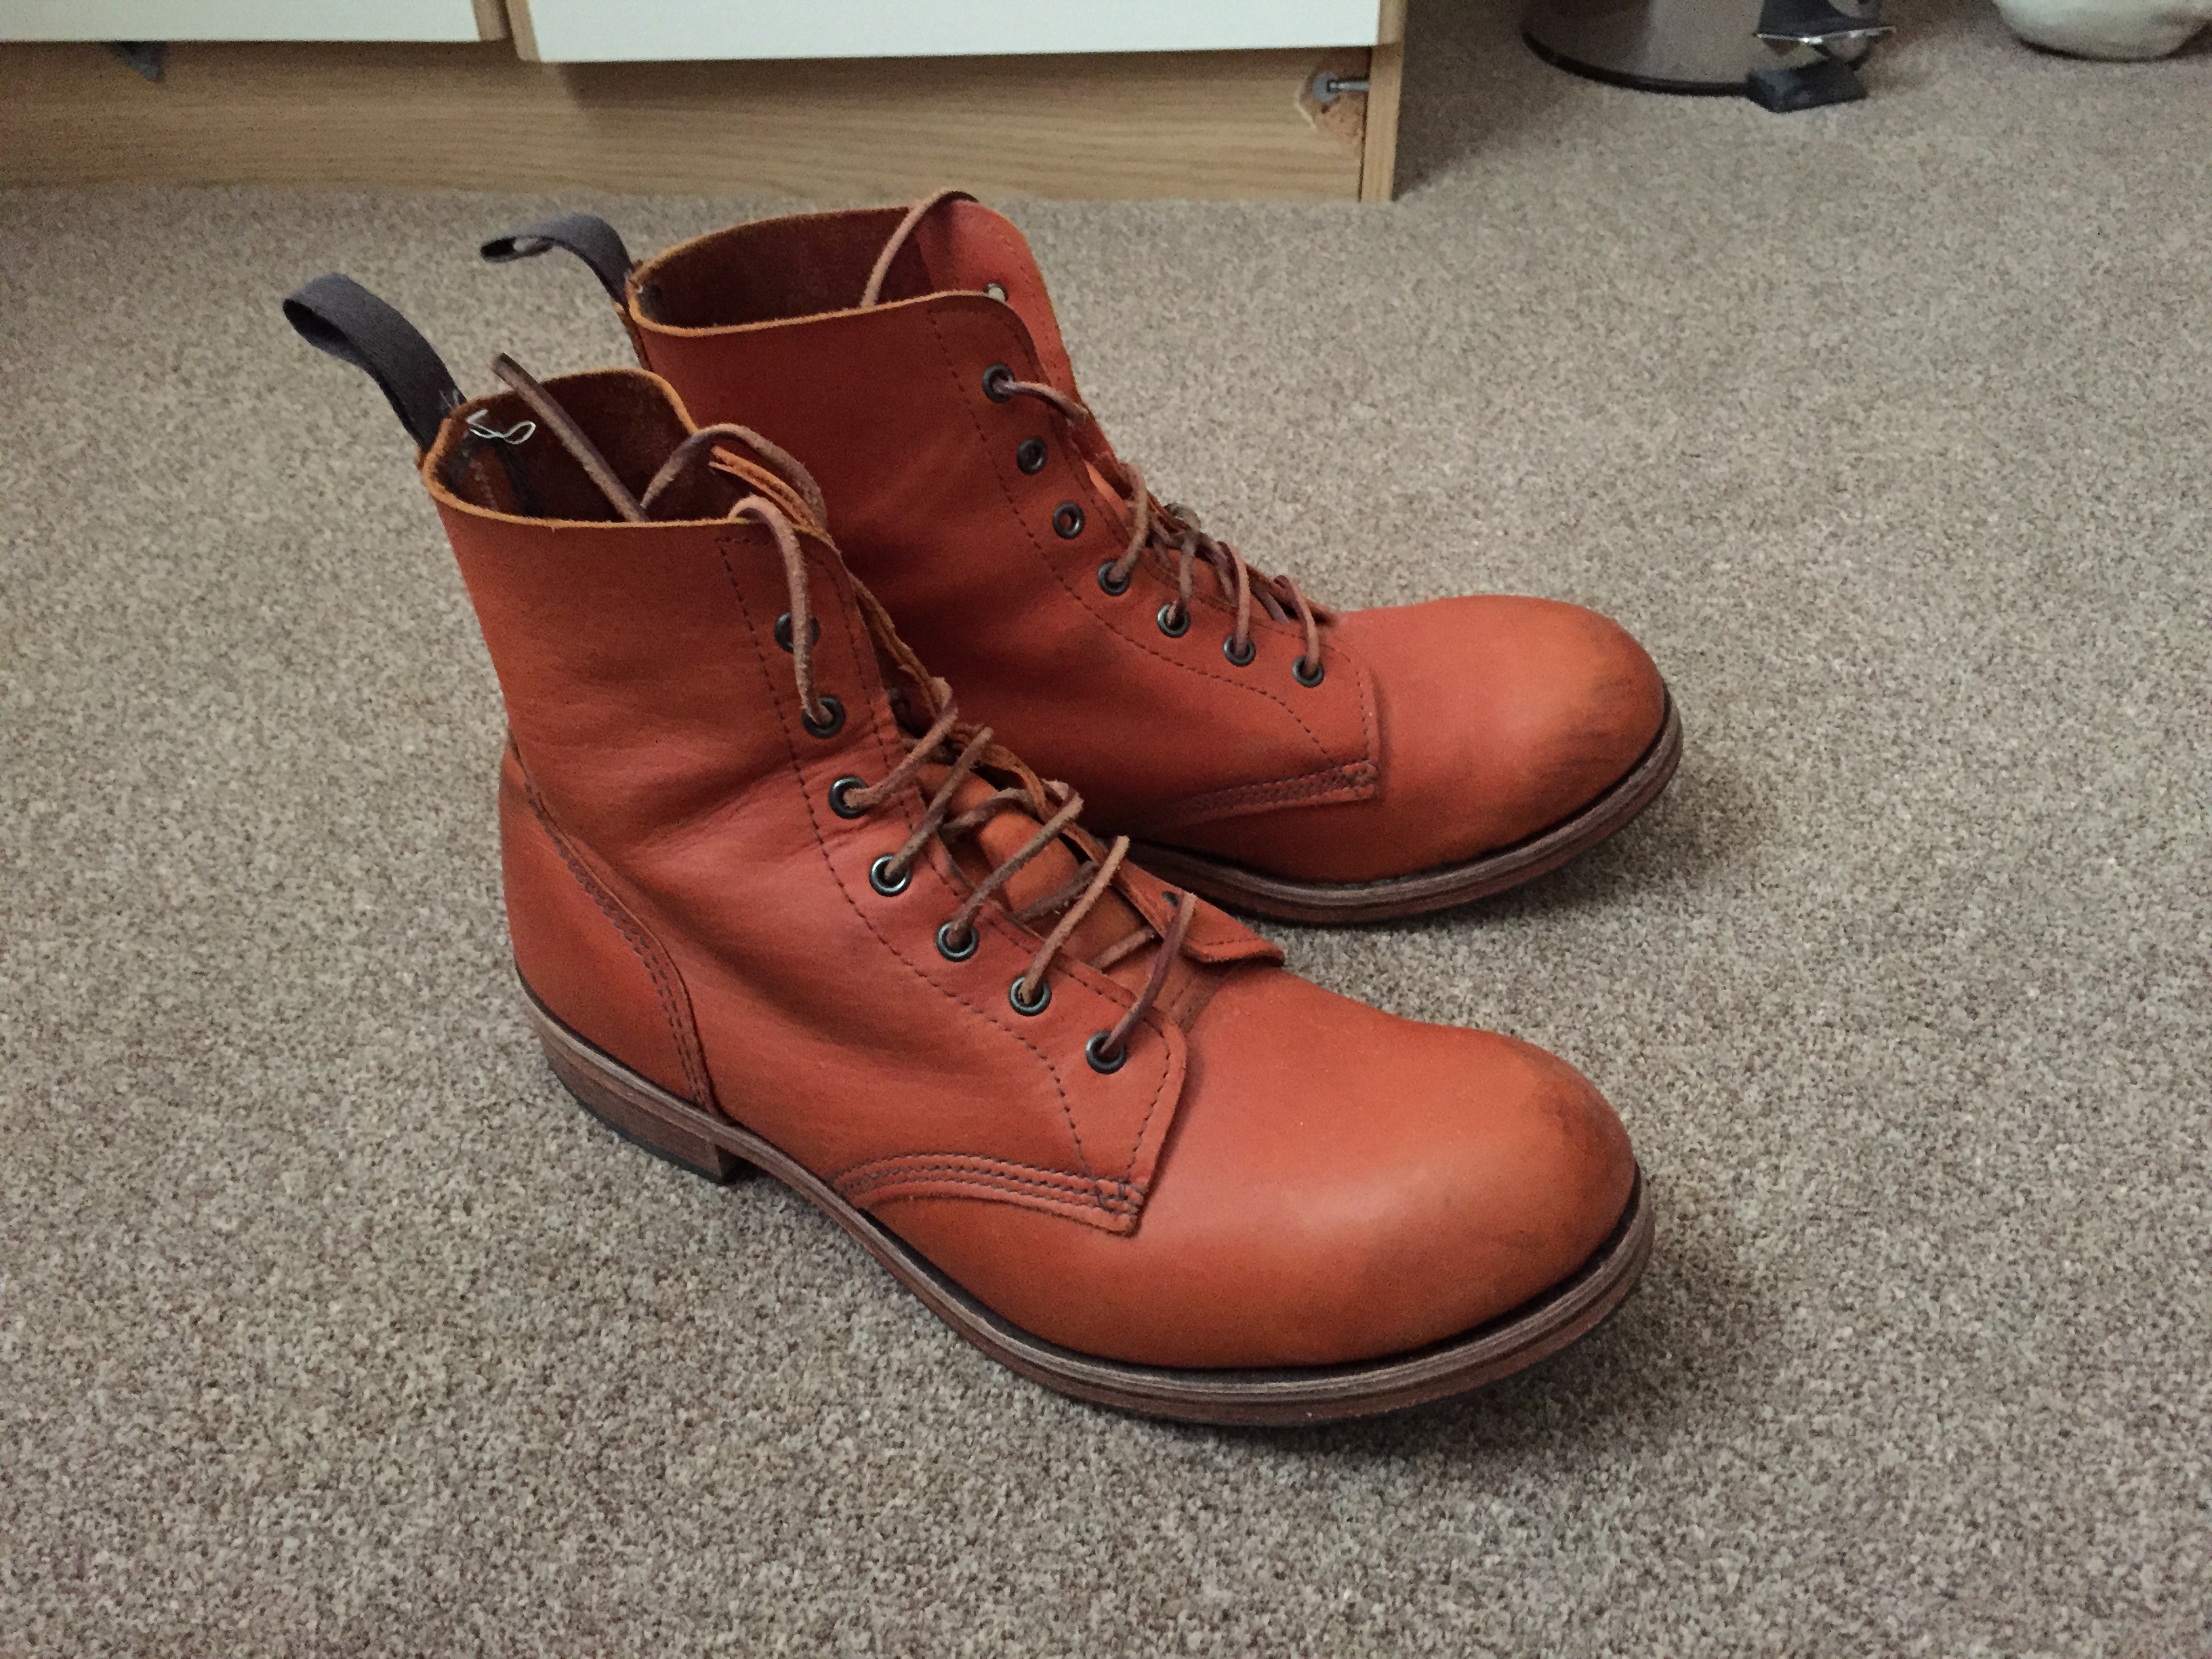 william lennon boots ebay